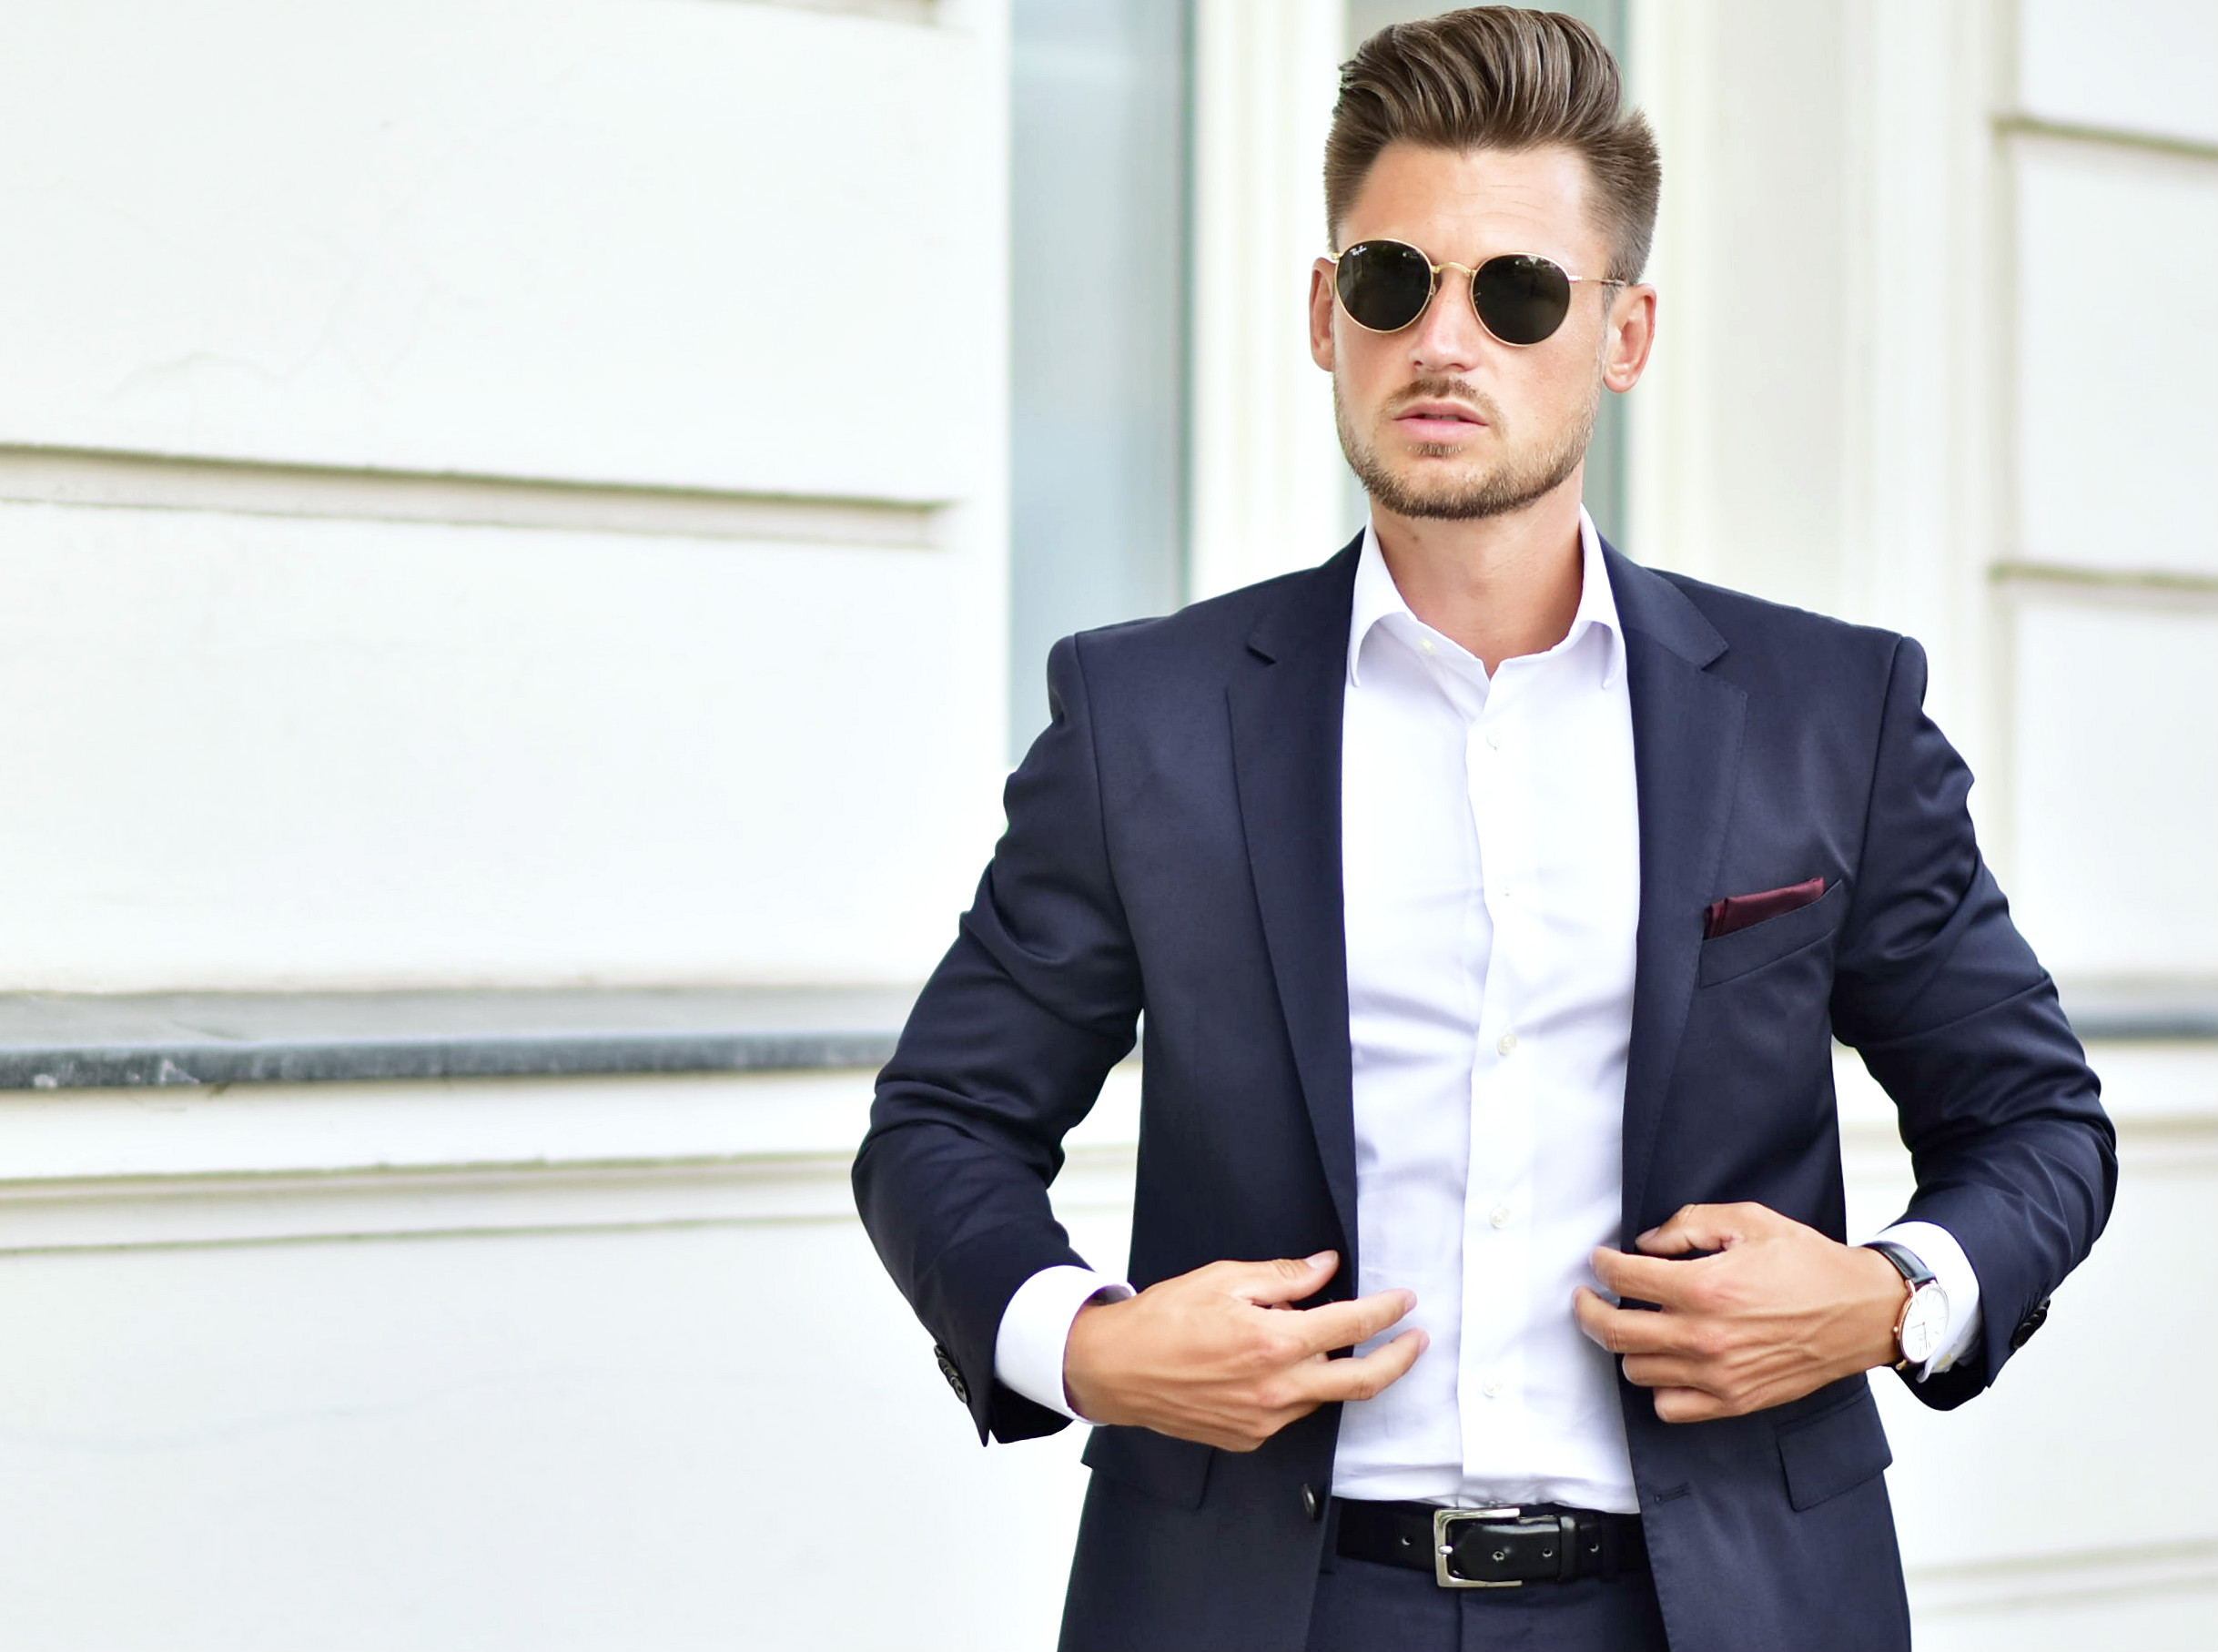 Tommeezjerry-Styleblog-Männerblog-Männer-Modeblog-Berlin-Berlinblog-Männermodeblog-Outfit-Classy-Chic-Suit-Anzug-Hugo-Boss-Nationalmannschaft-Deutschland-Marineblau-Suit-Up